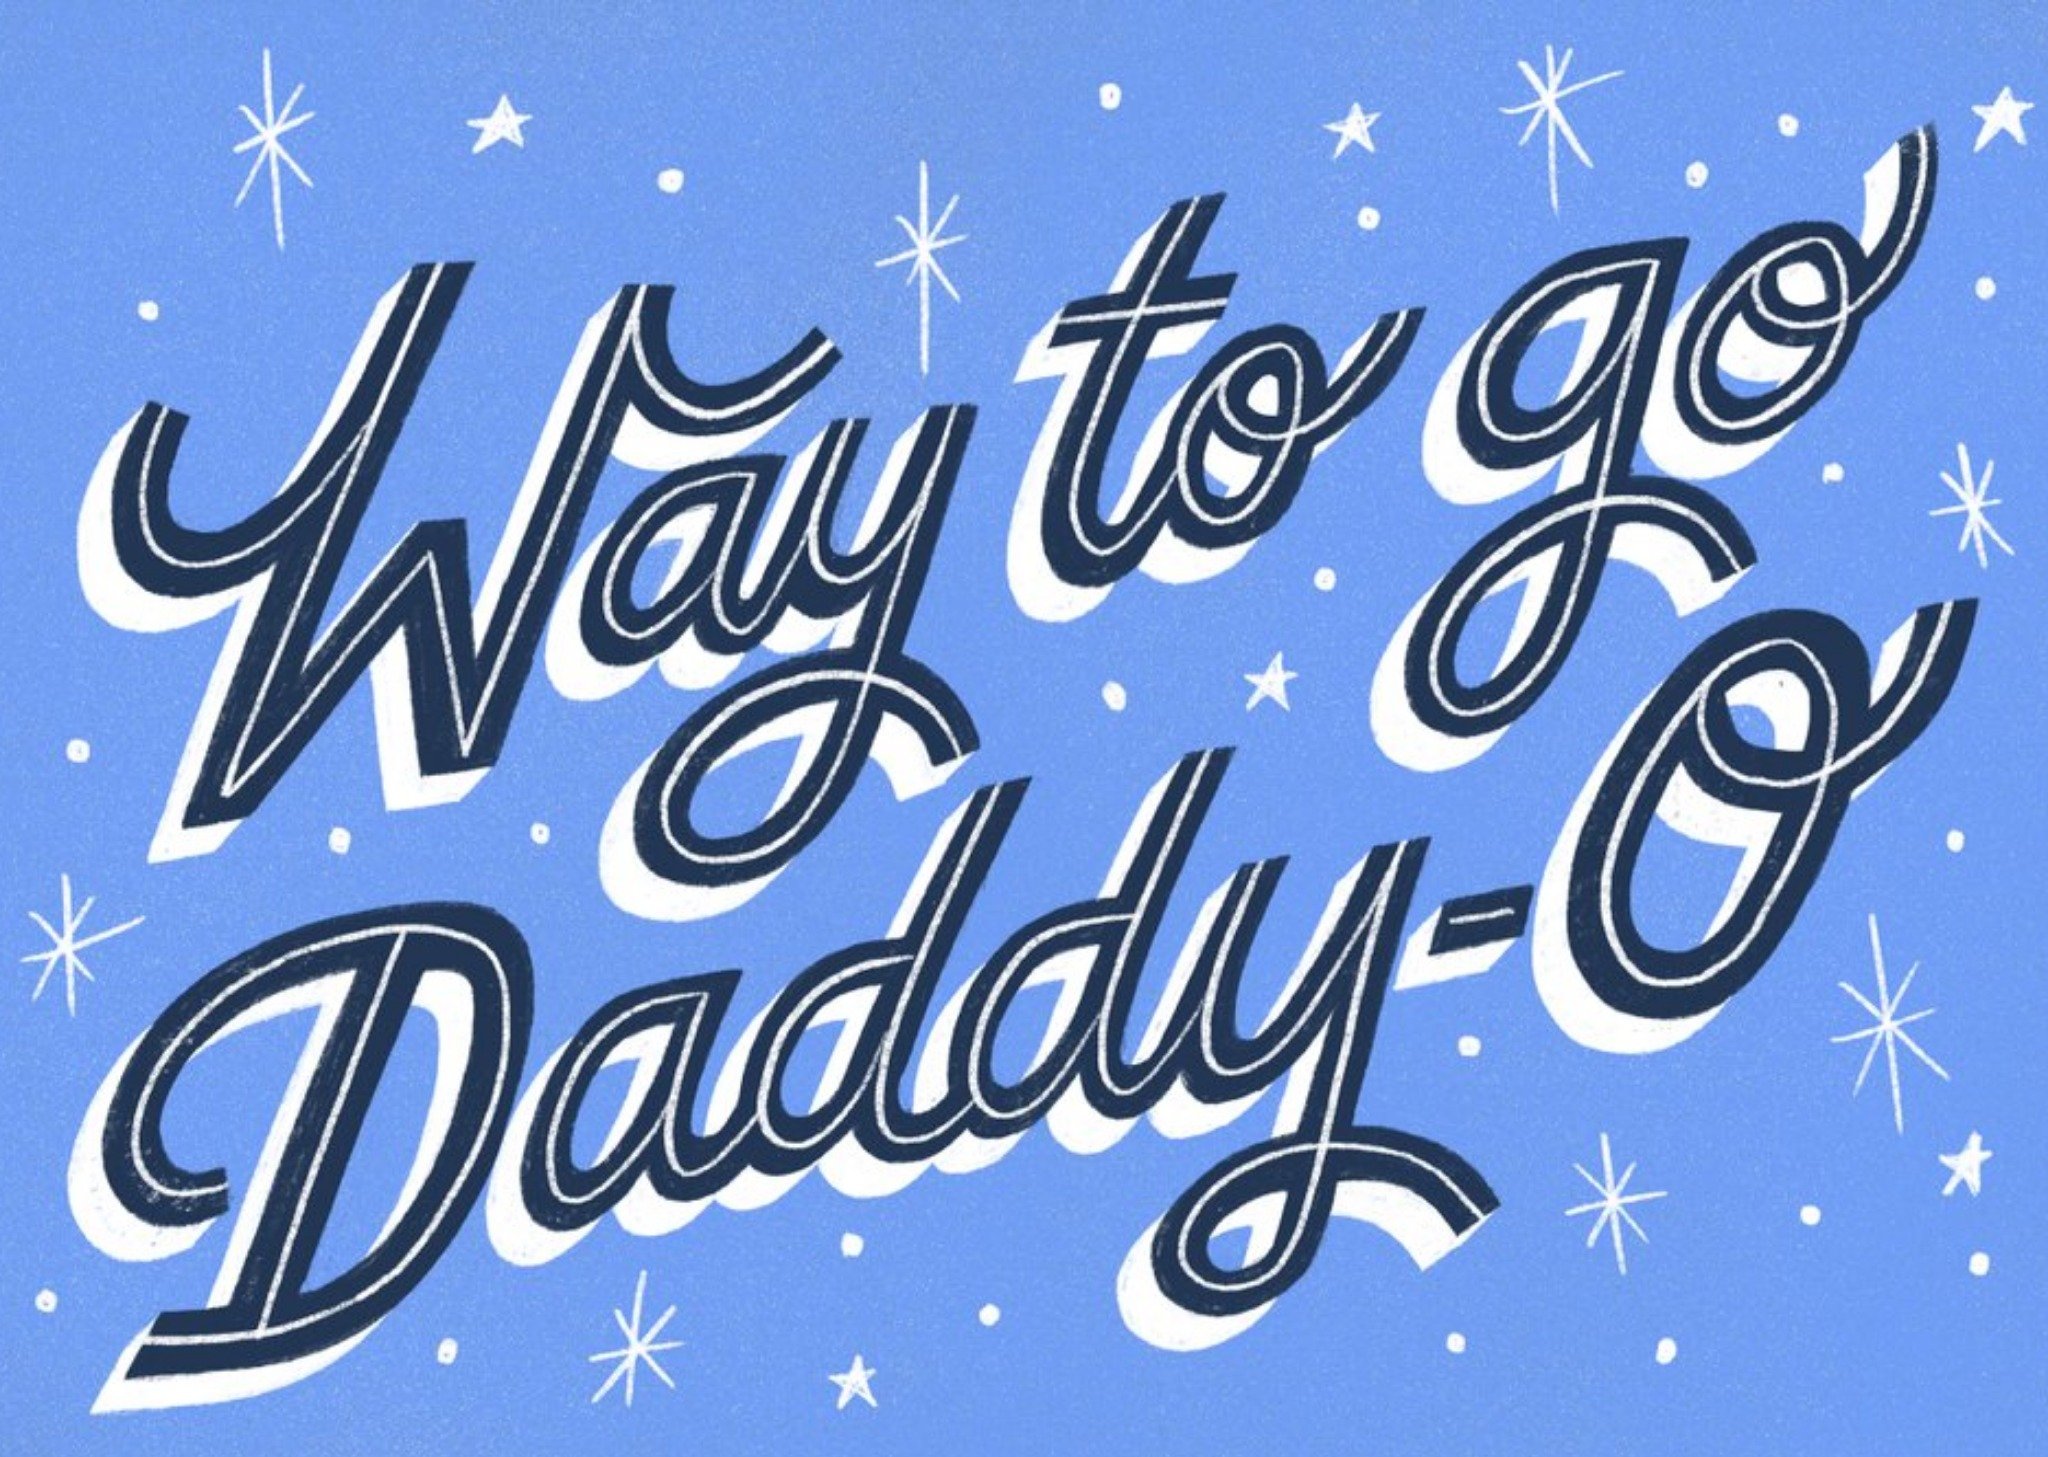 Cardy Club Typographic Way To Go Daddy O Card Ecard